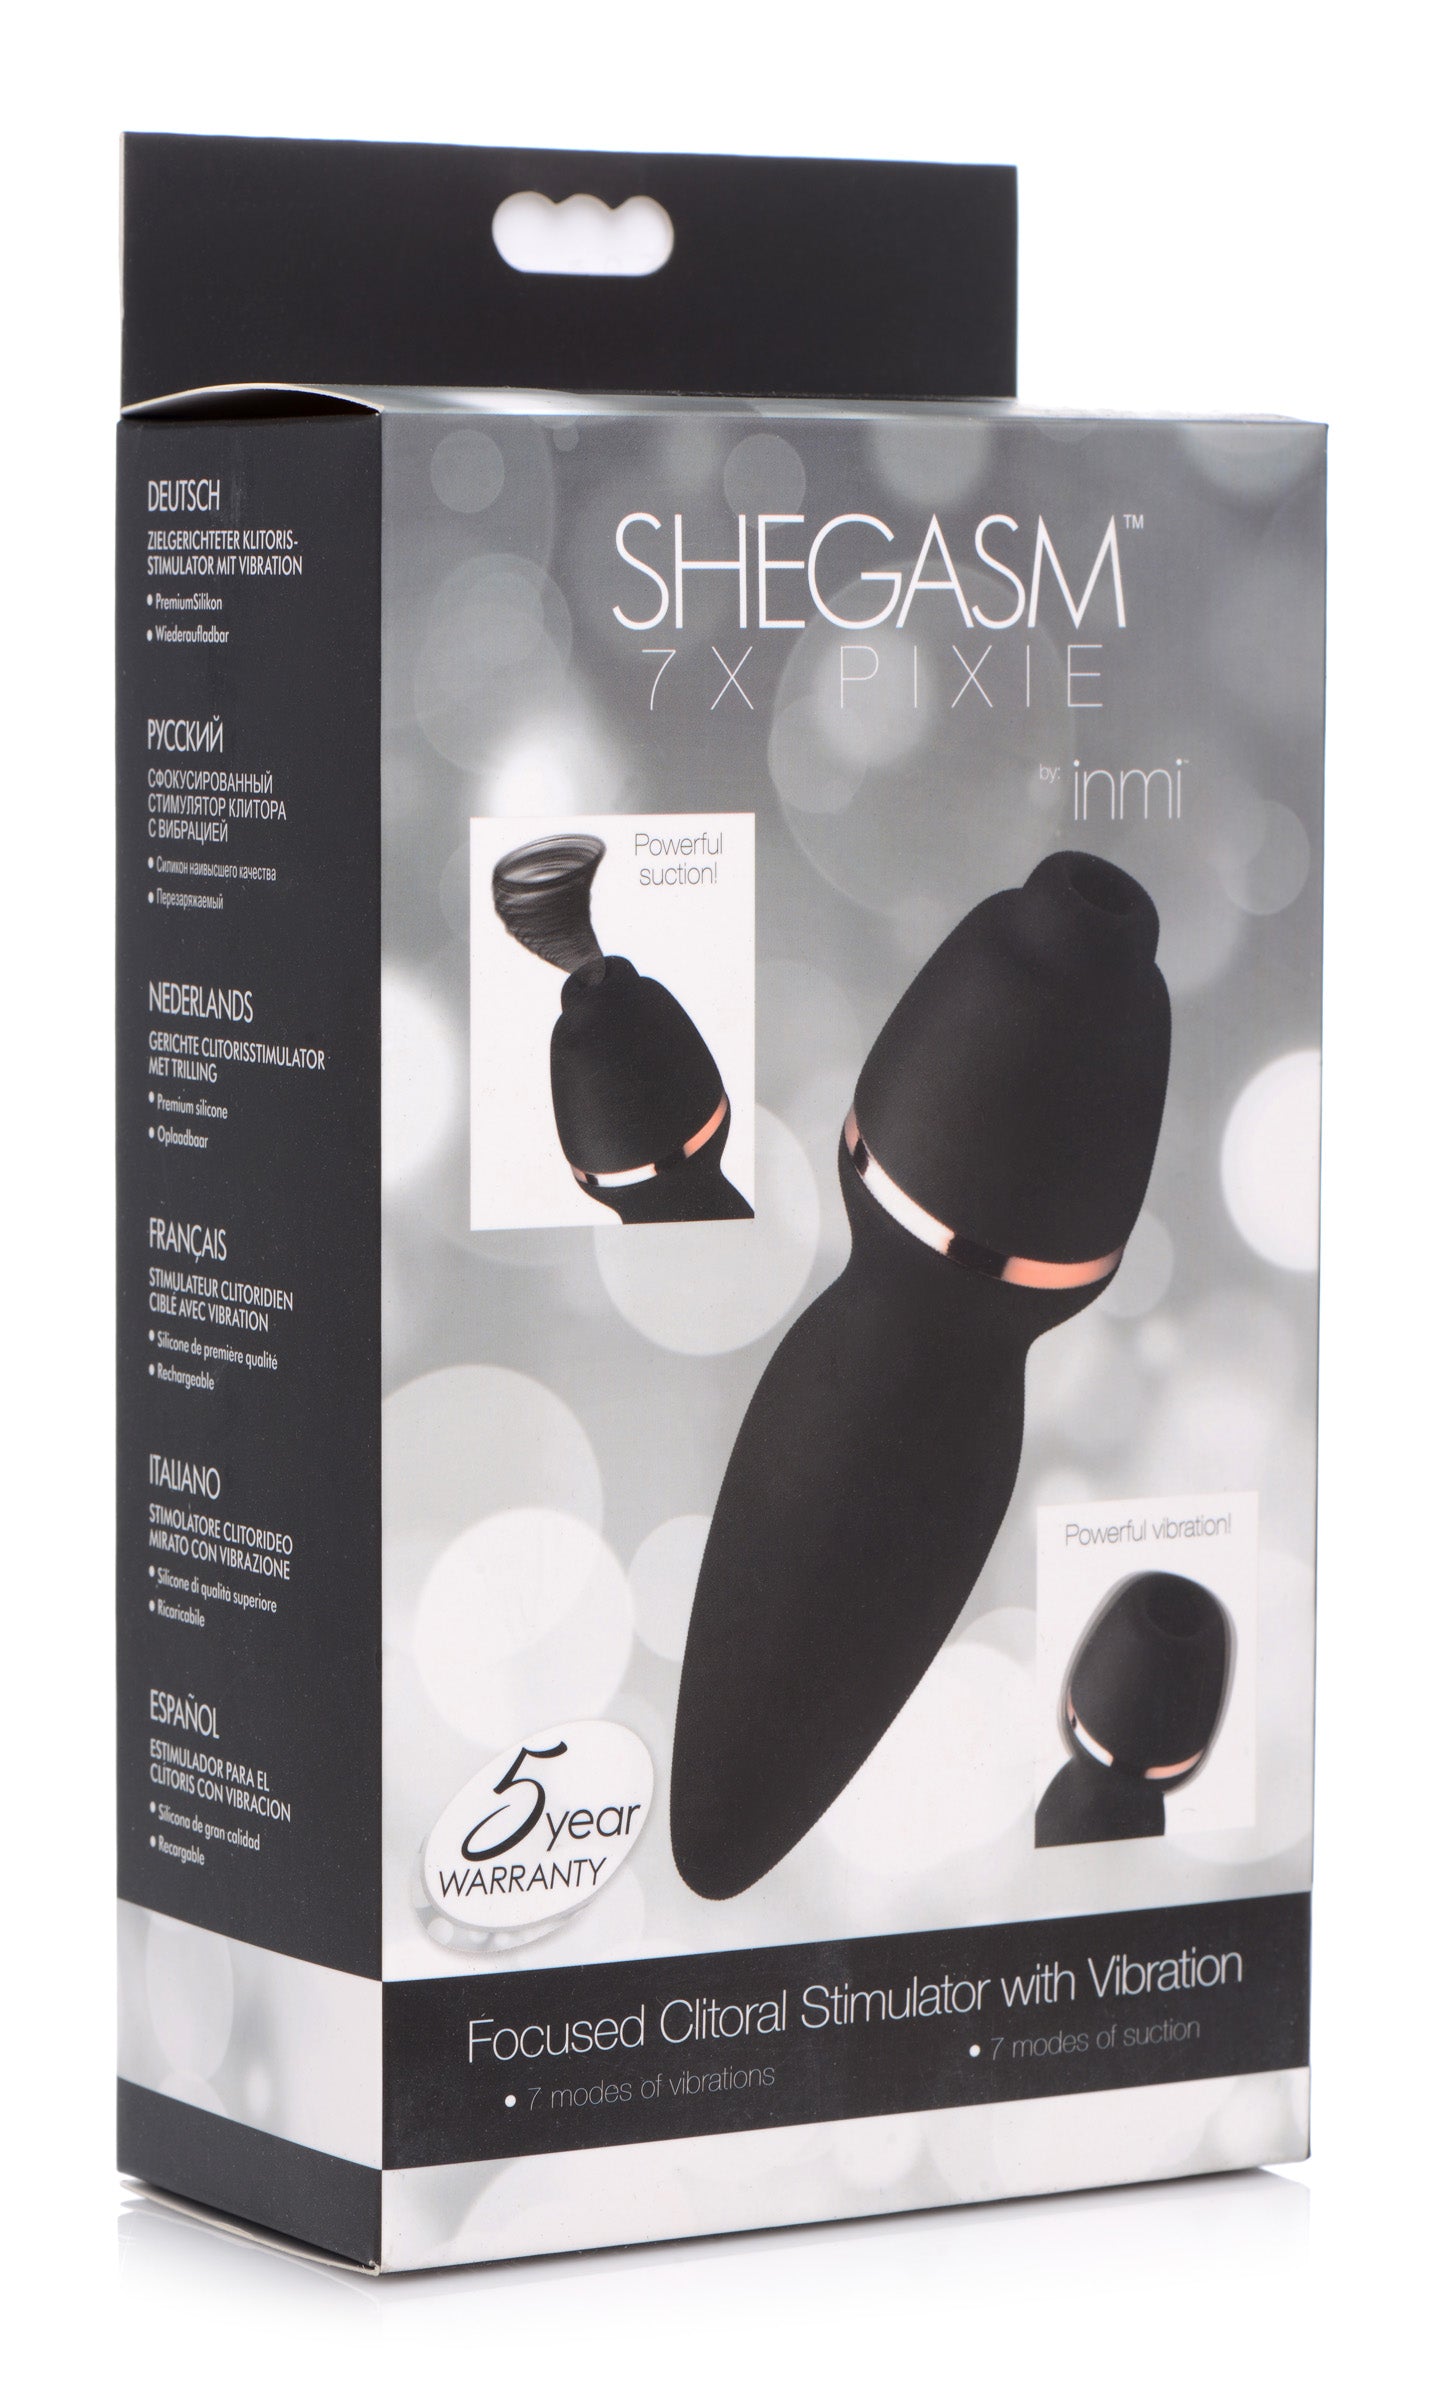 Shegasm 7X Pixie Focused Clitoral Stimulator with Vibration - UABDSM